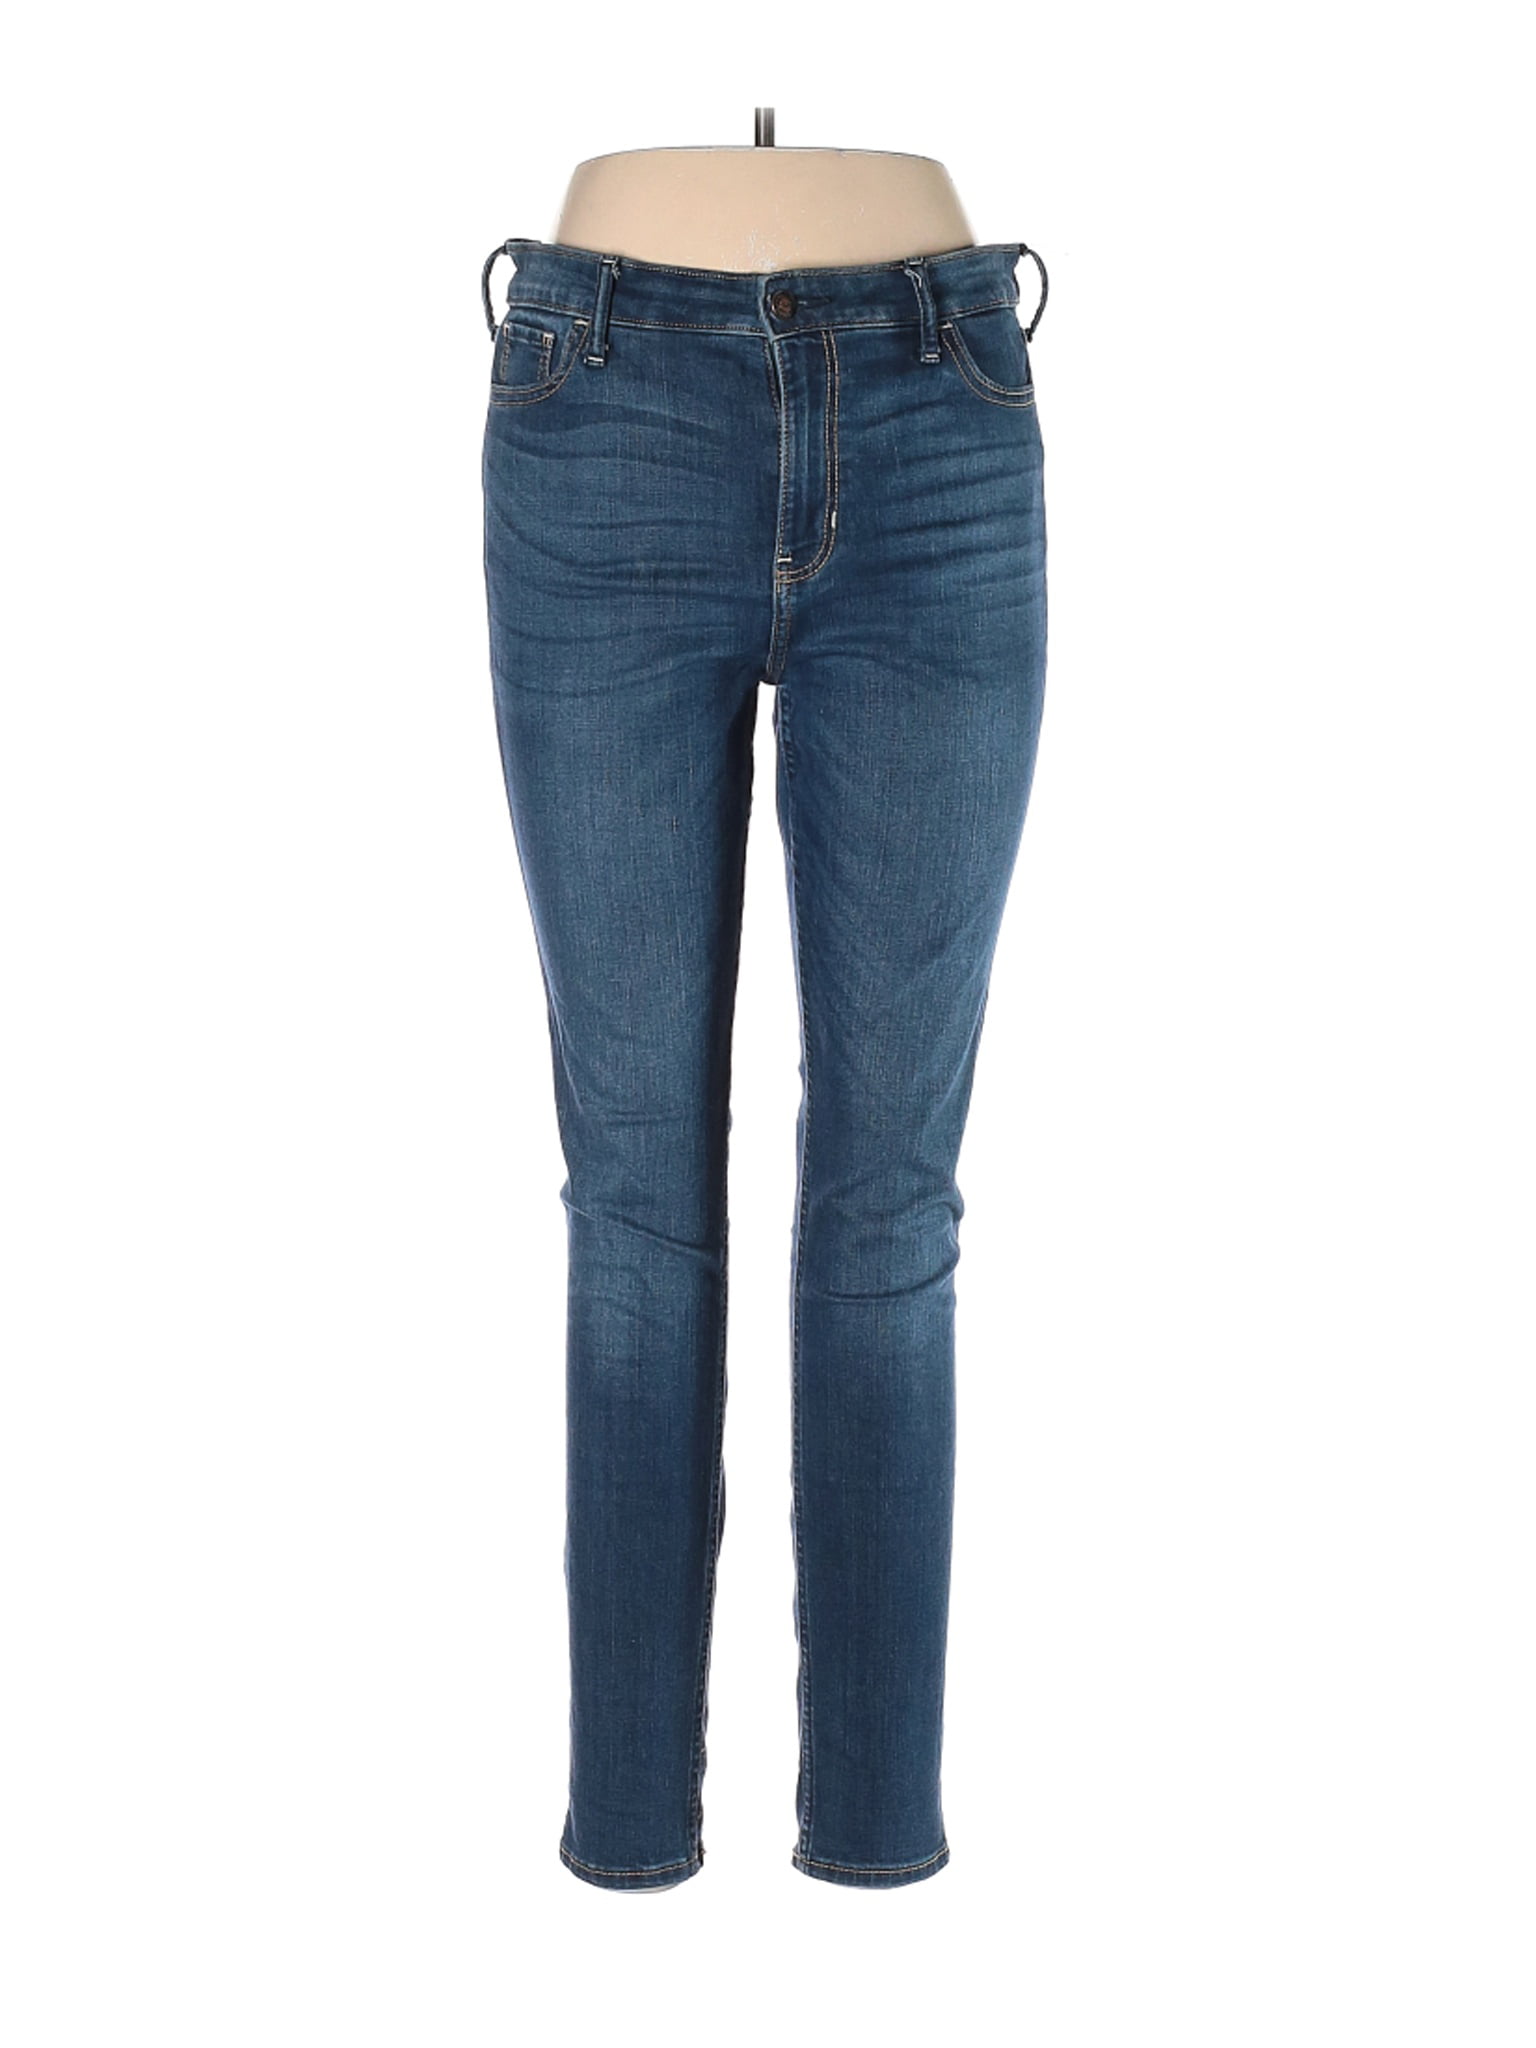 size 11 hollister jeans